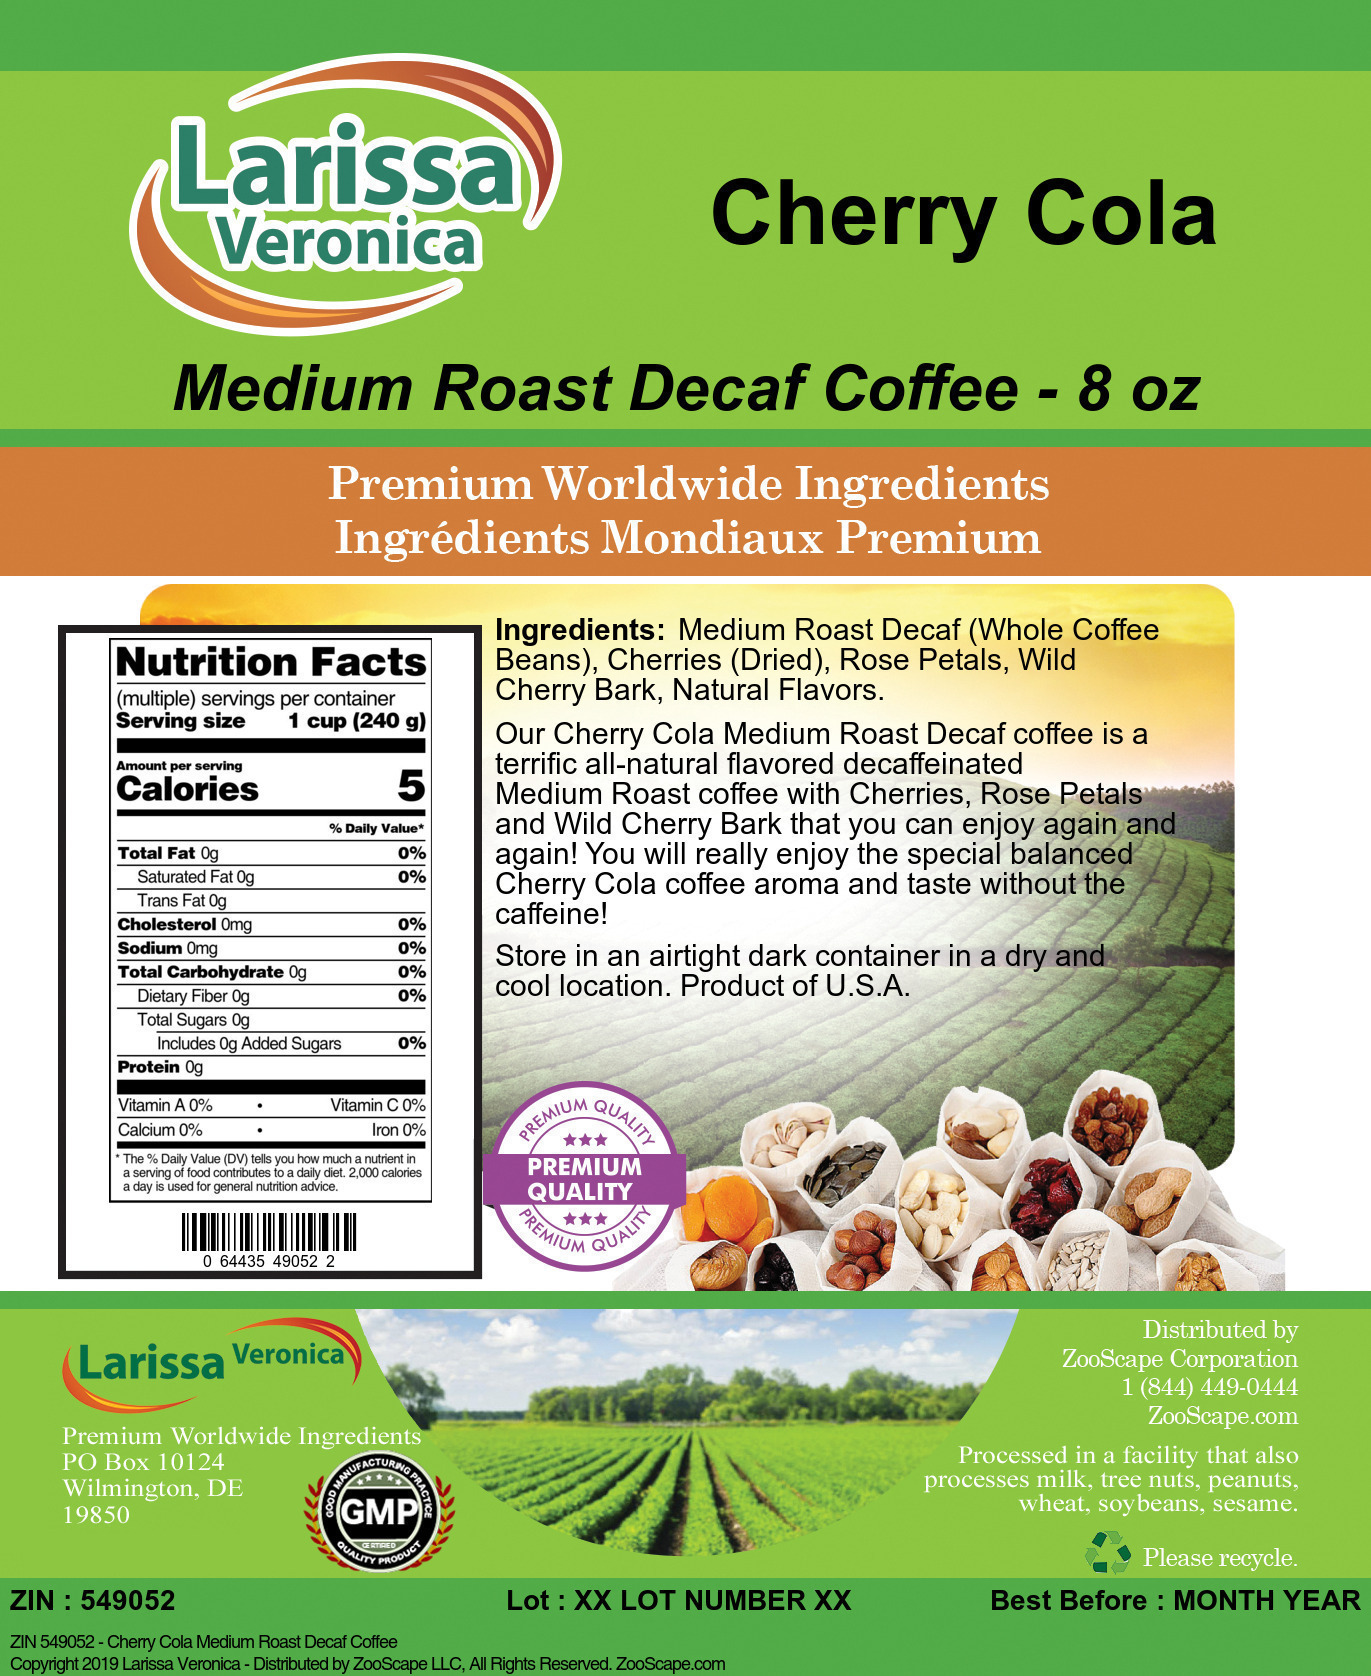 Cherry Cola Medium Roast Decaf Coffee - Label